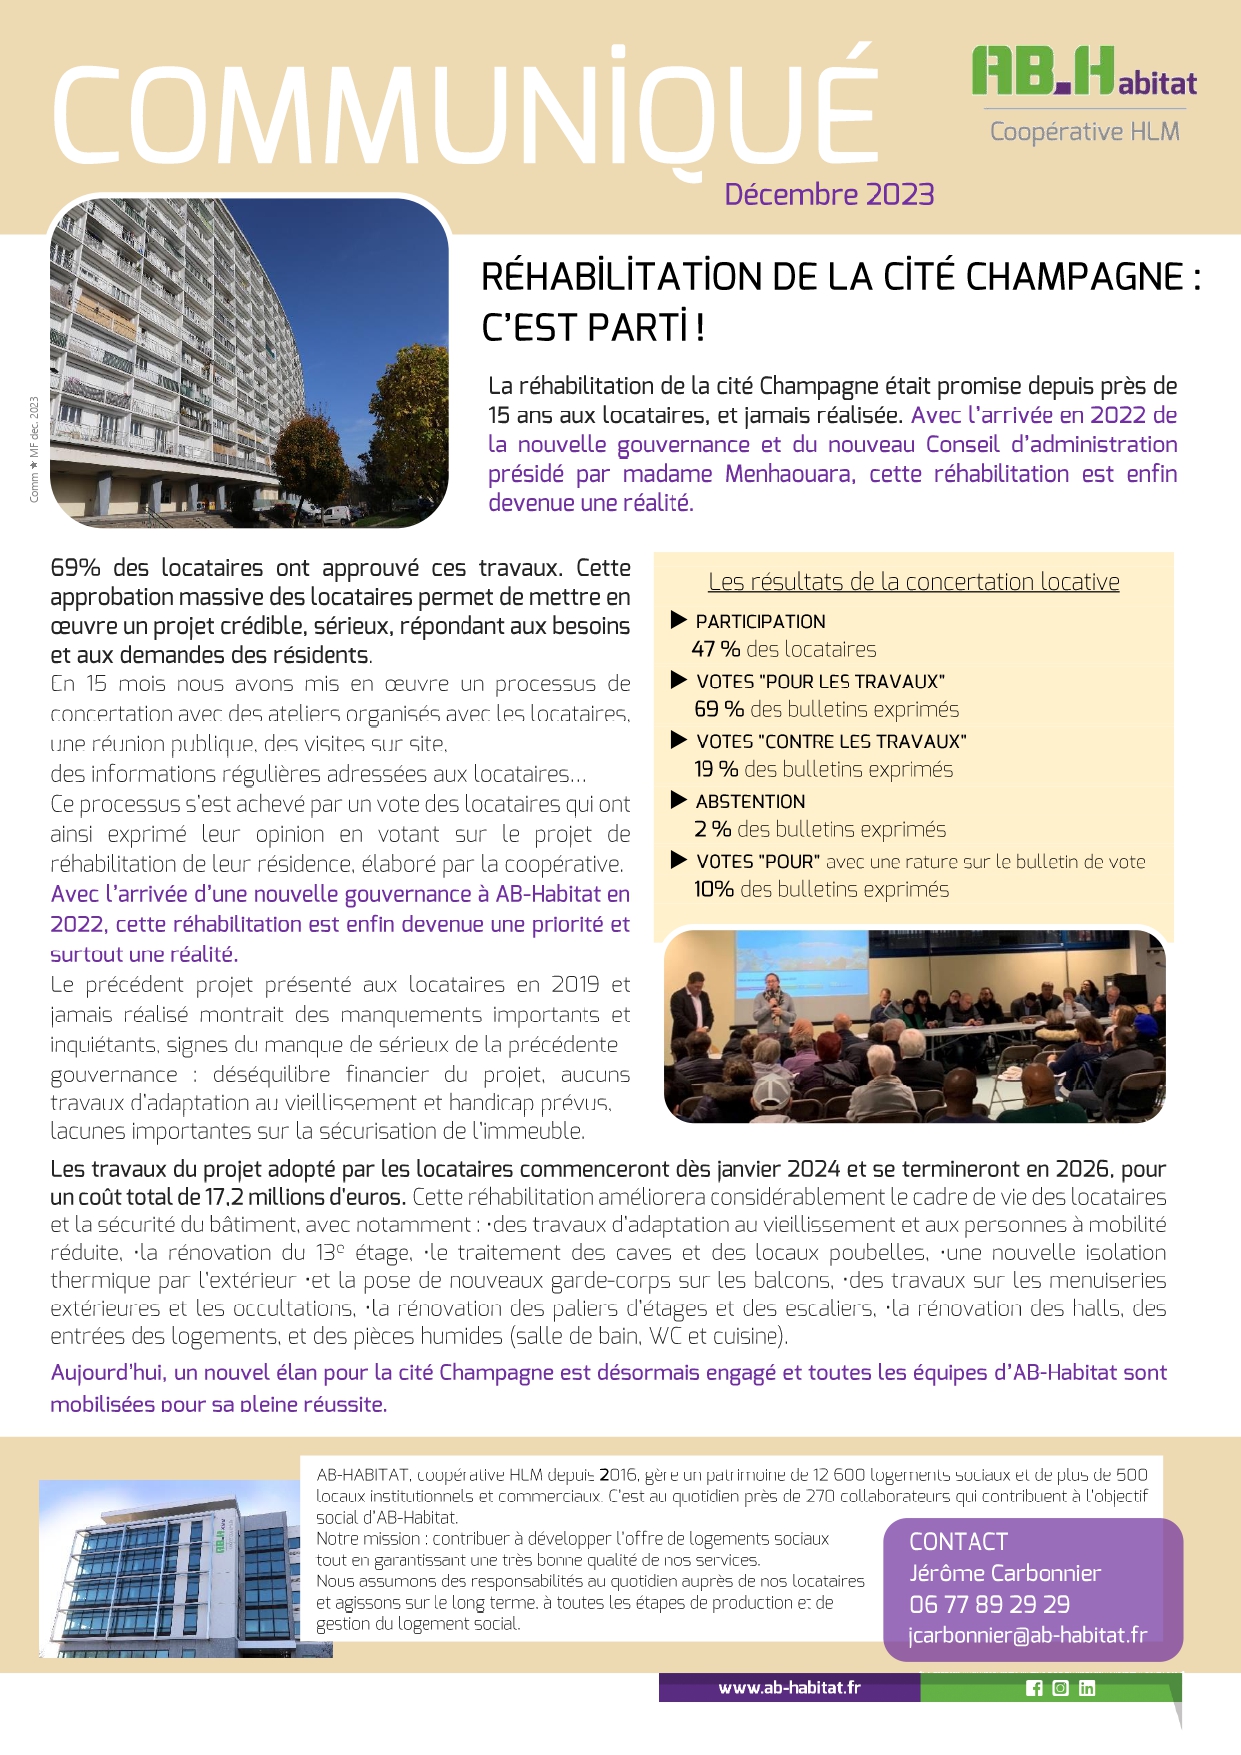 communique rehab Champagne dec 2023 page 0001 - AB-Habitat